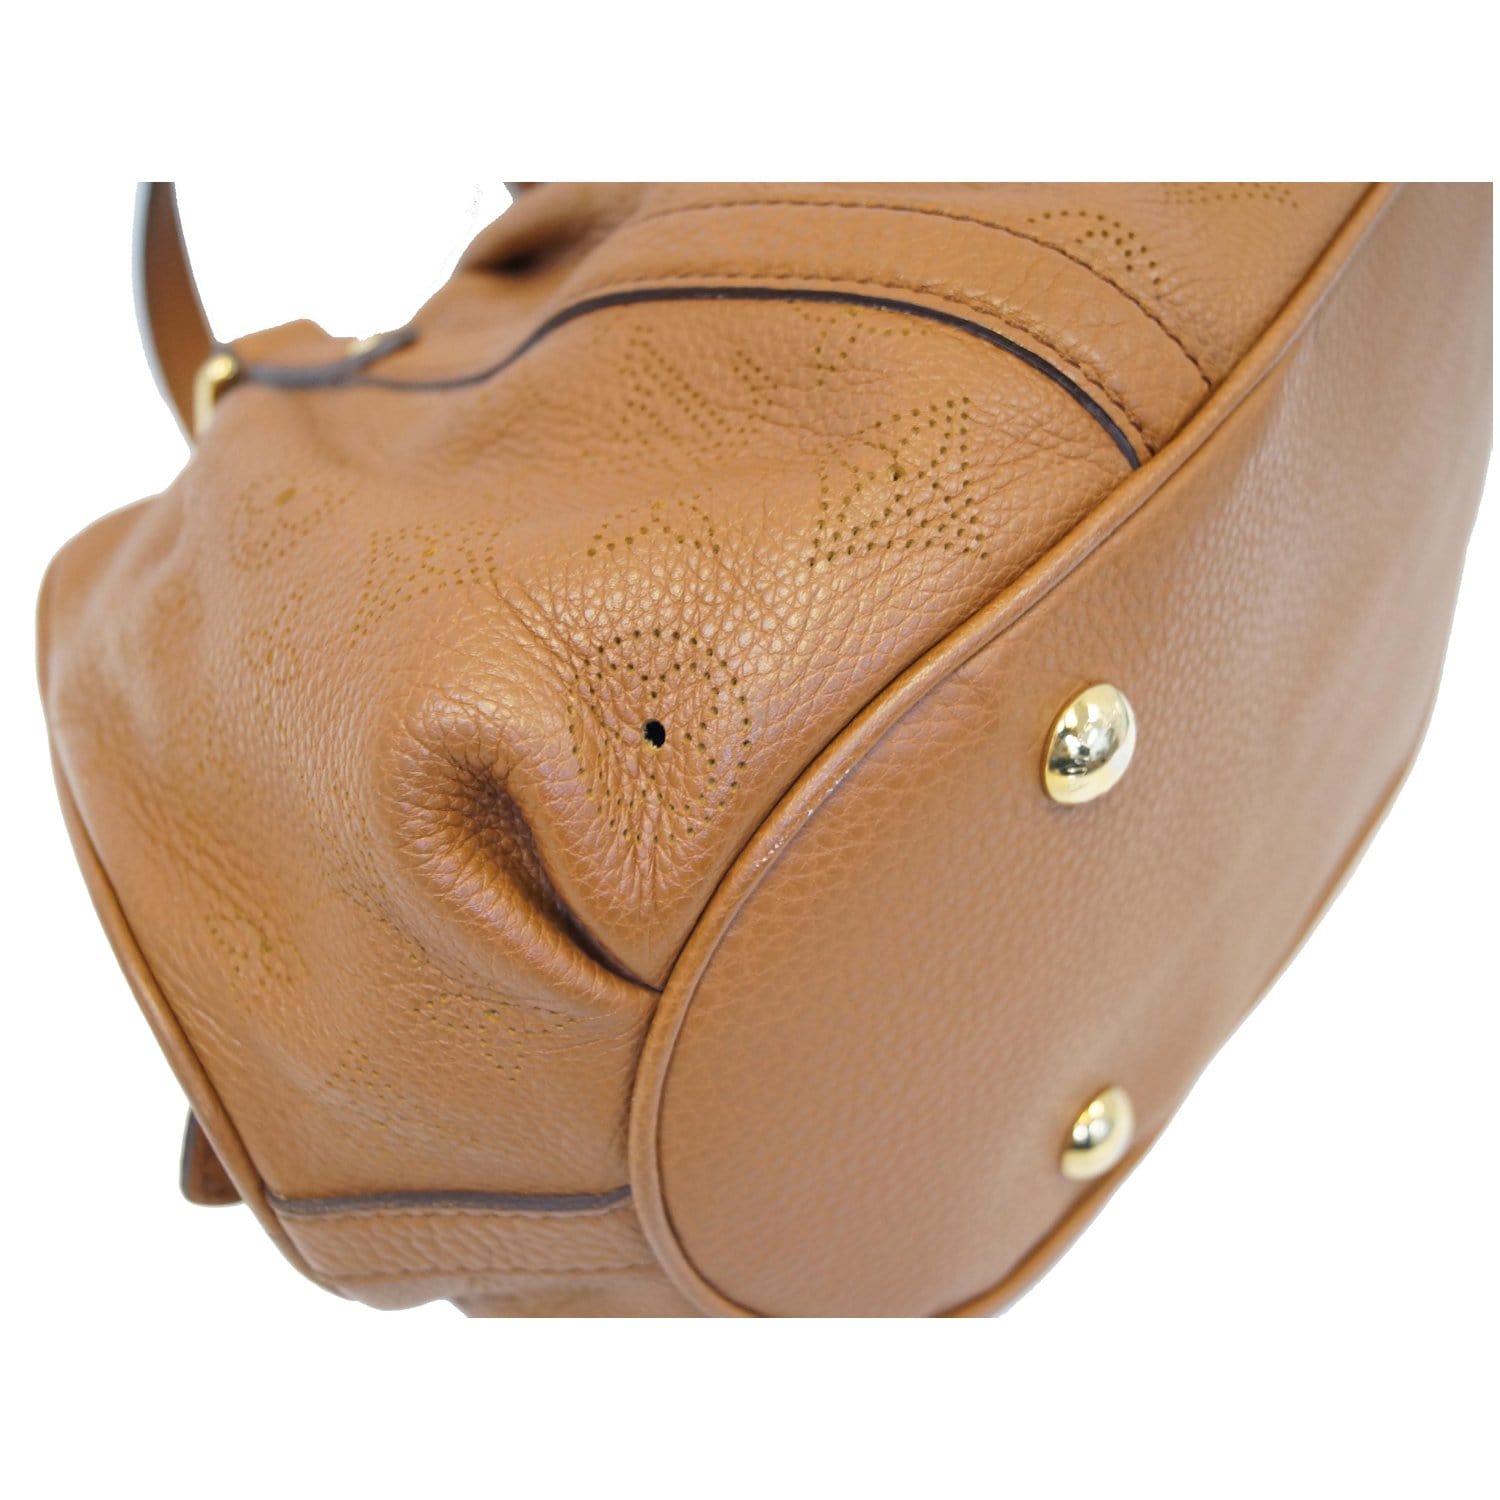 Louis Vuitton Mahina Stellar PM Brown Leather Two Way Shoulder bag